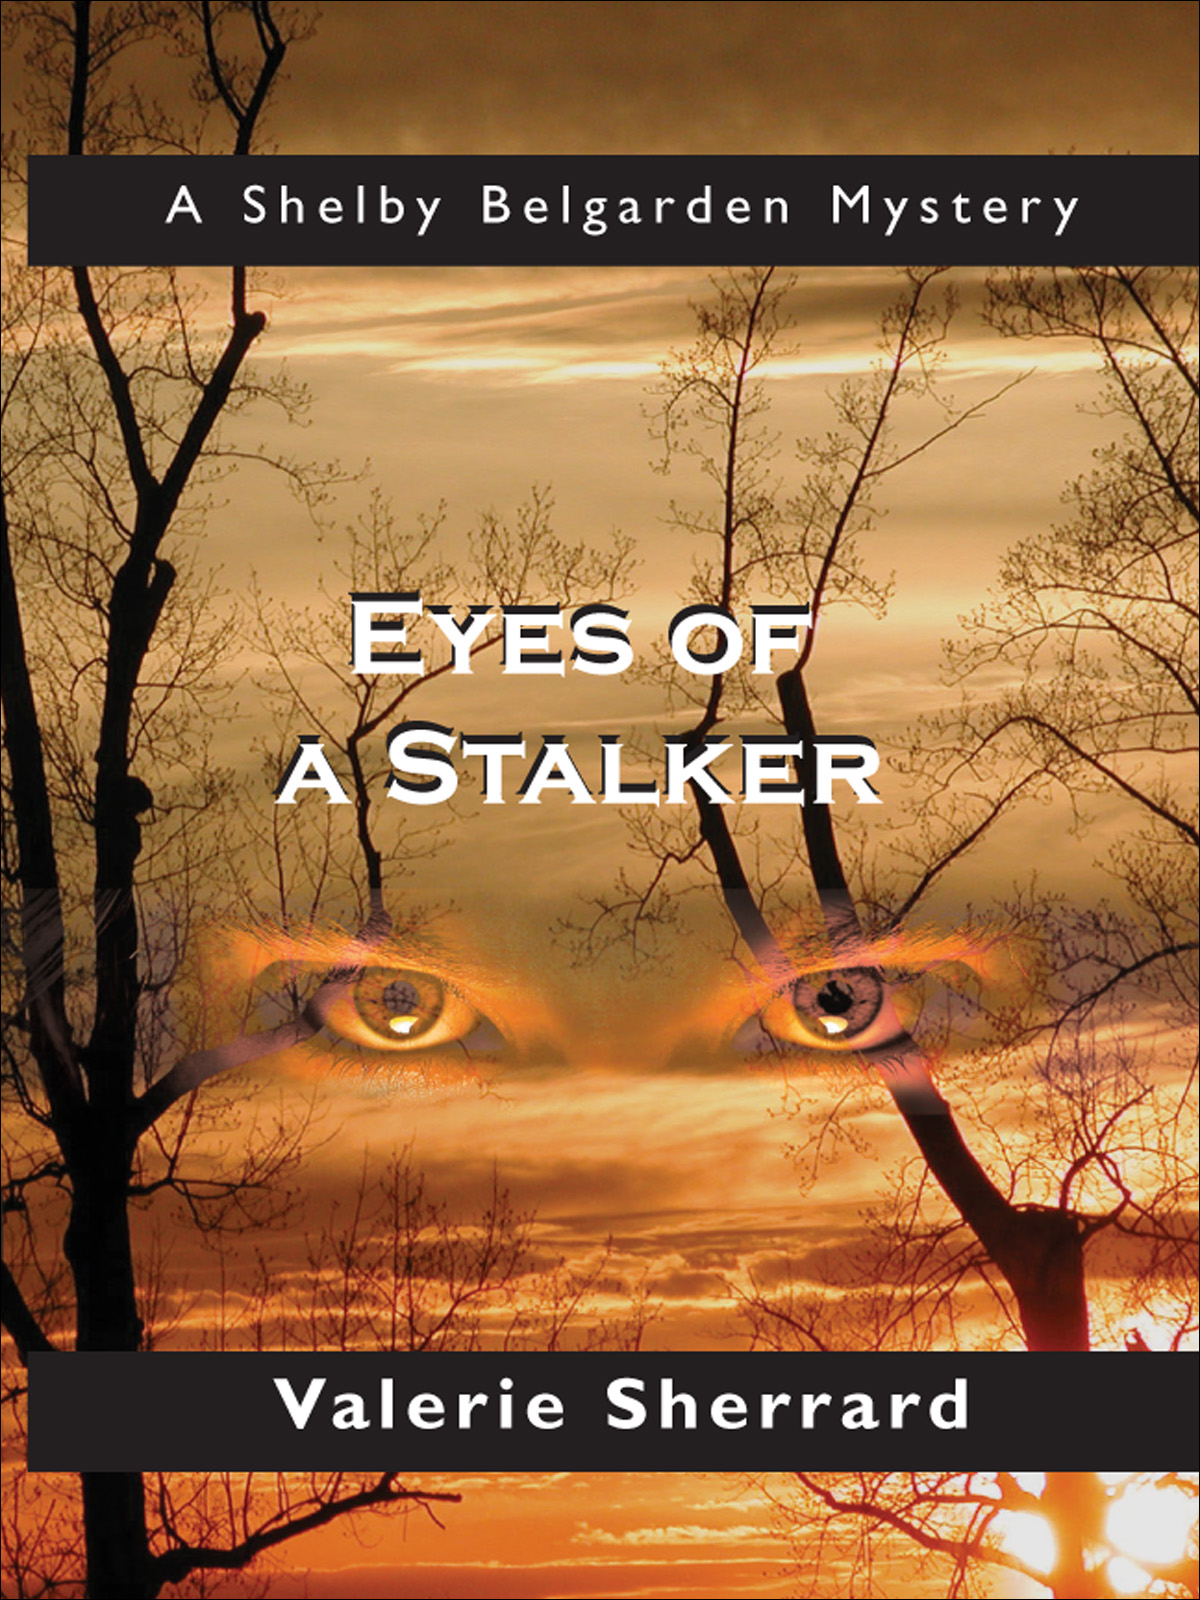 Eyes of a Stalker by Valerie Sherrard